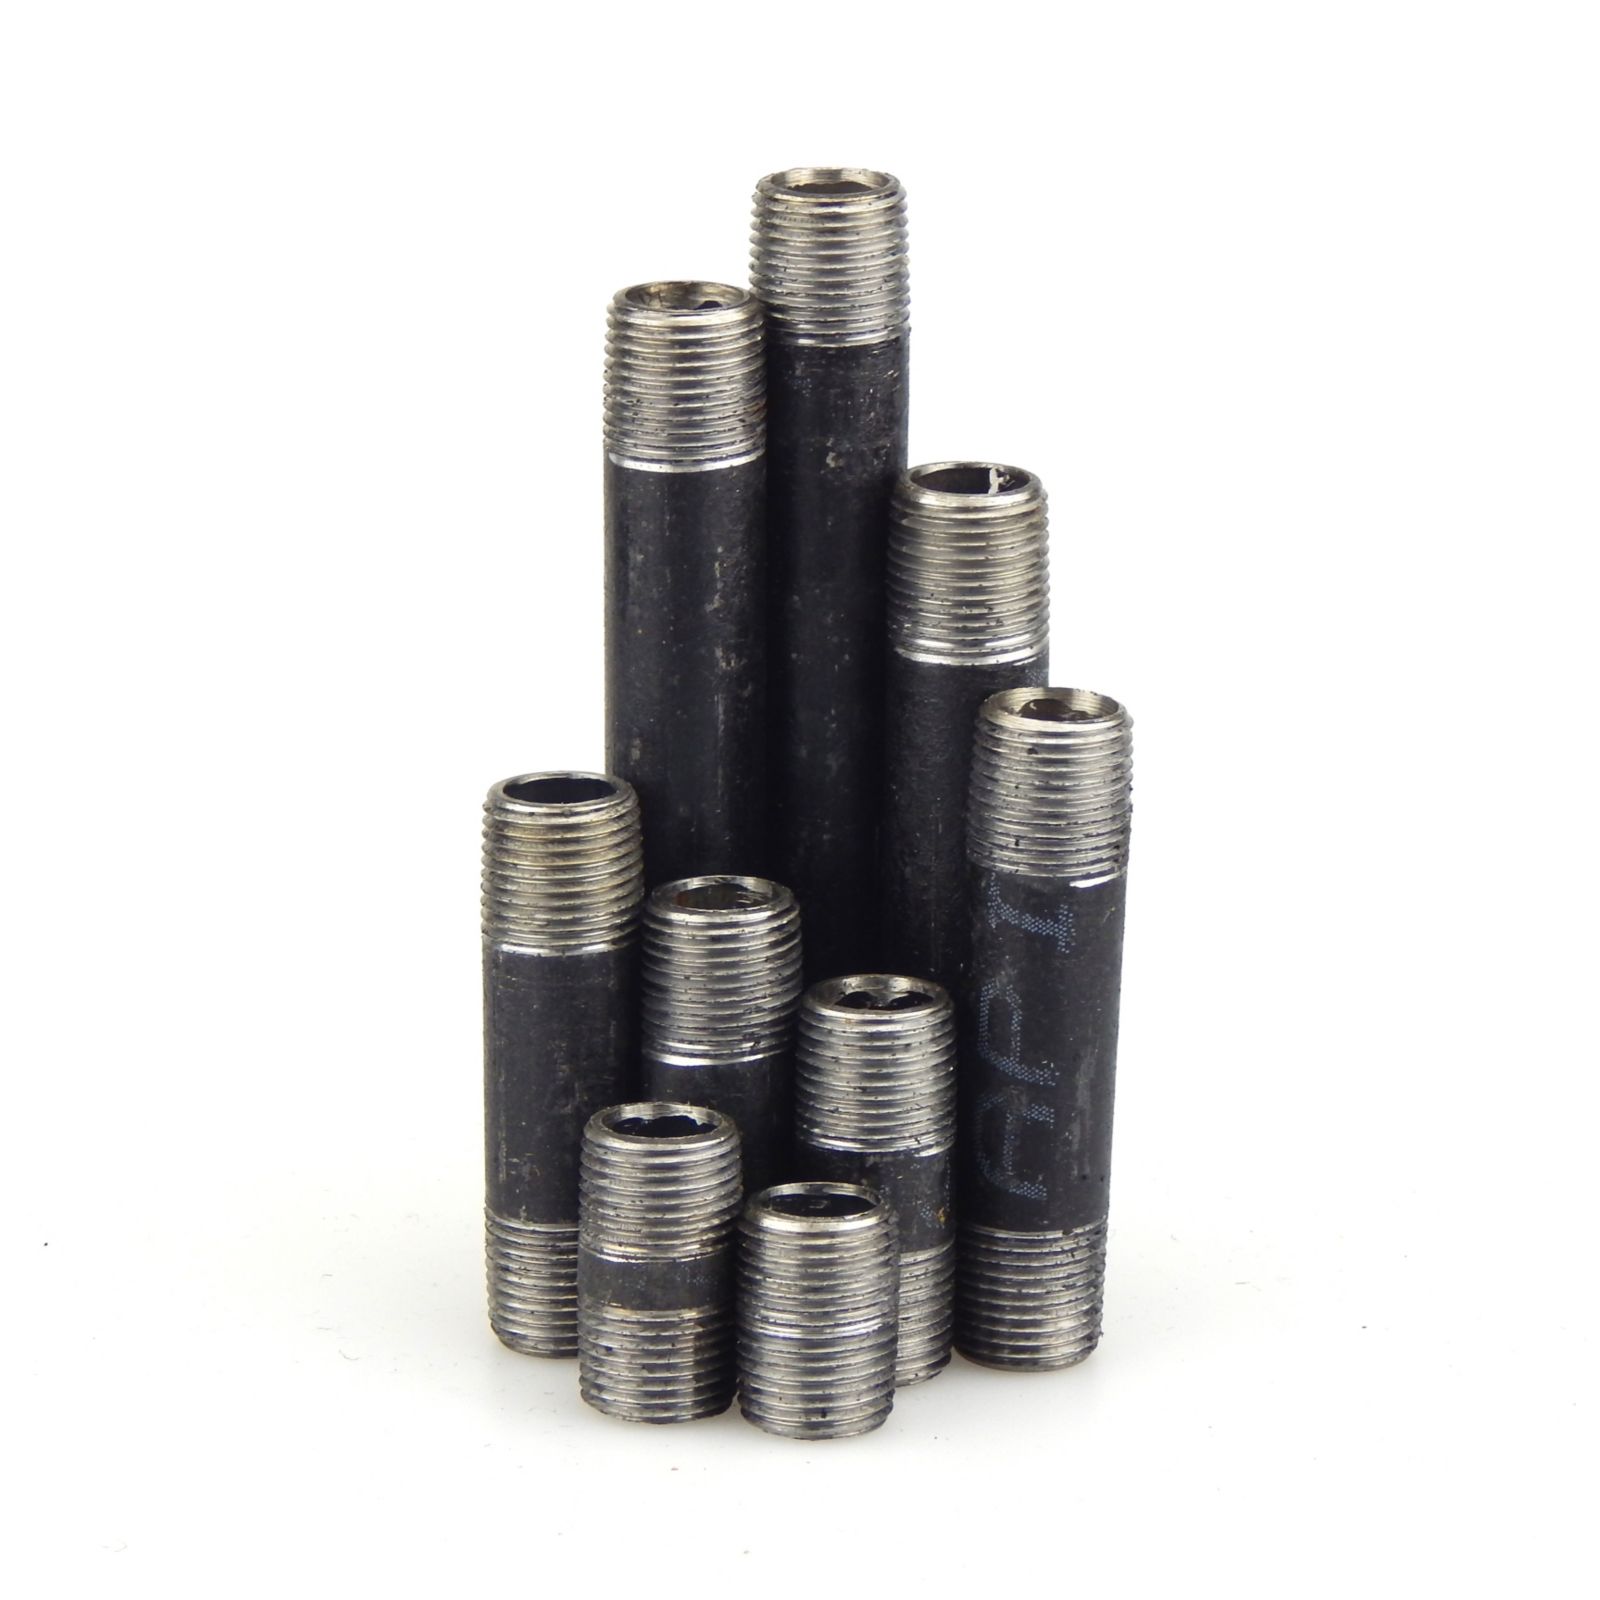 Southland 583-000 - Black Steel Nipple, 66-Pack, 1/2" I.D. - Assorted Lengths